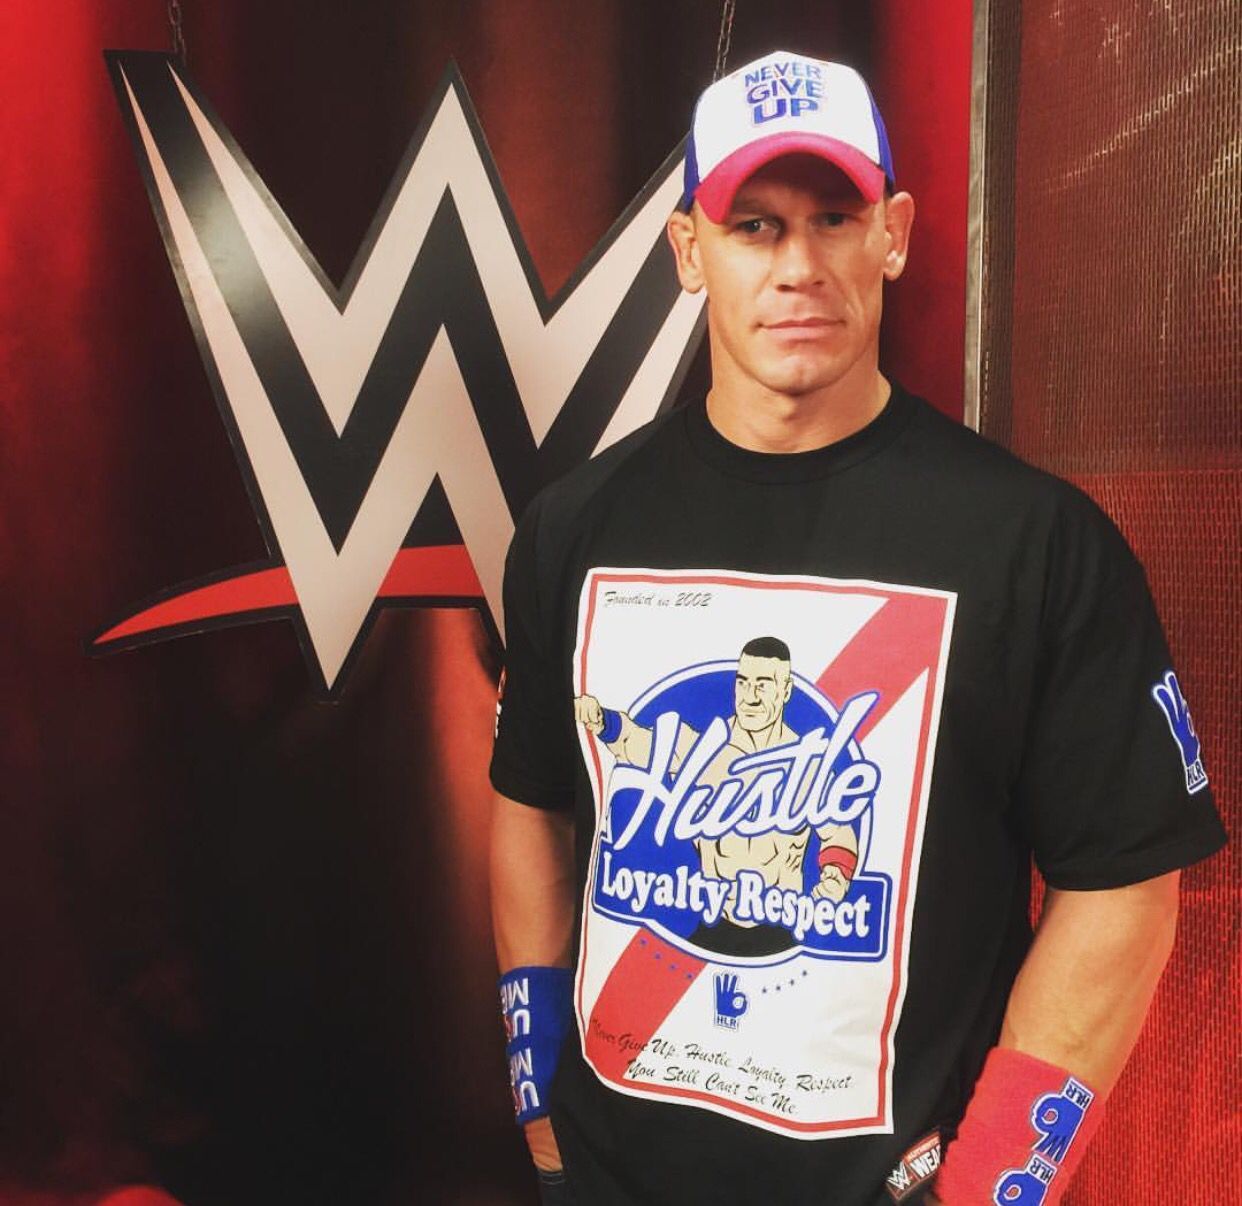 John Cena. #hustle #loyalty #respect